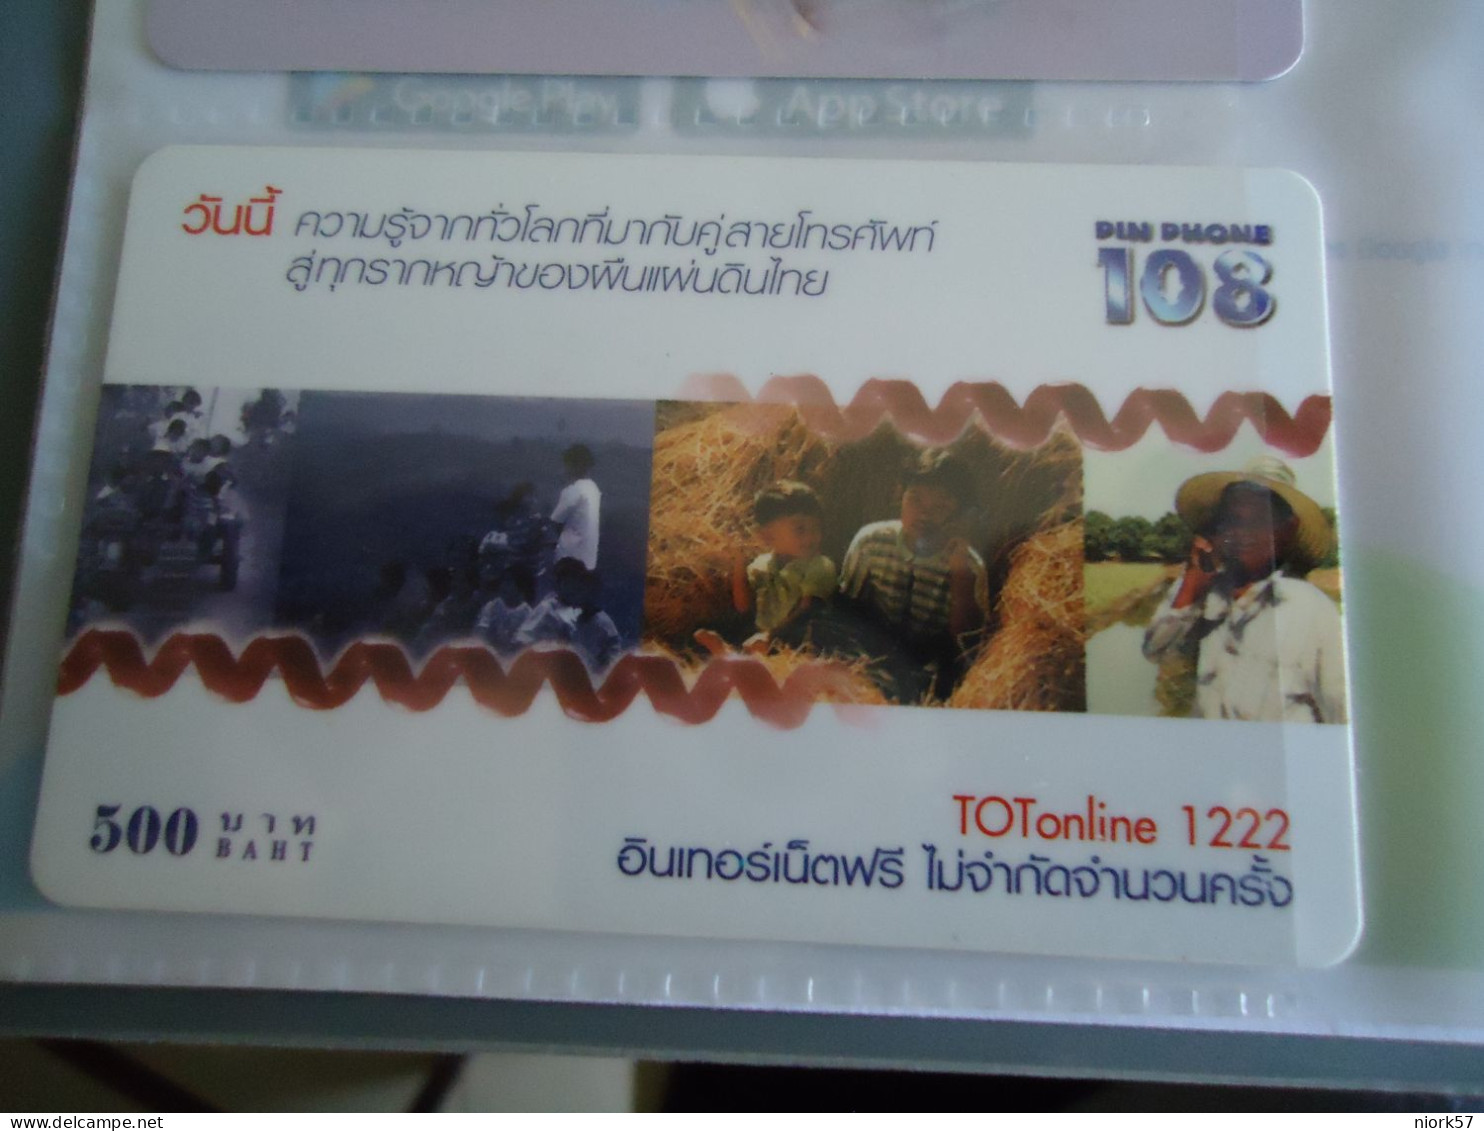 THAILAND USED CARDS PIN 108  THAI  LIFE UNITS 500 - Thaïland